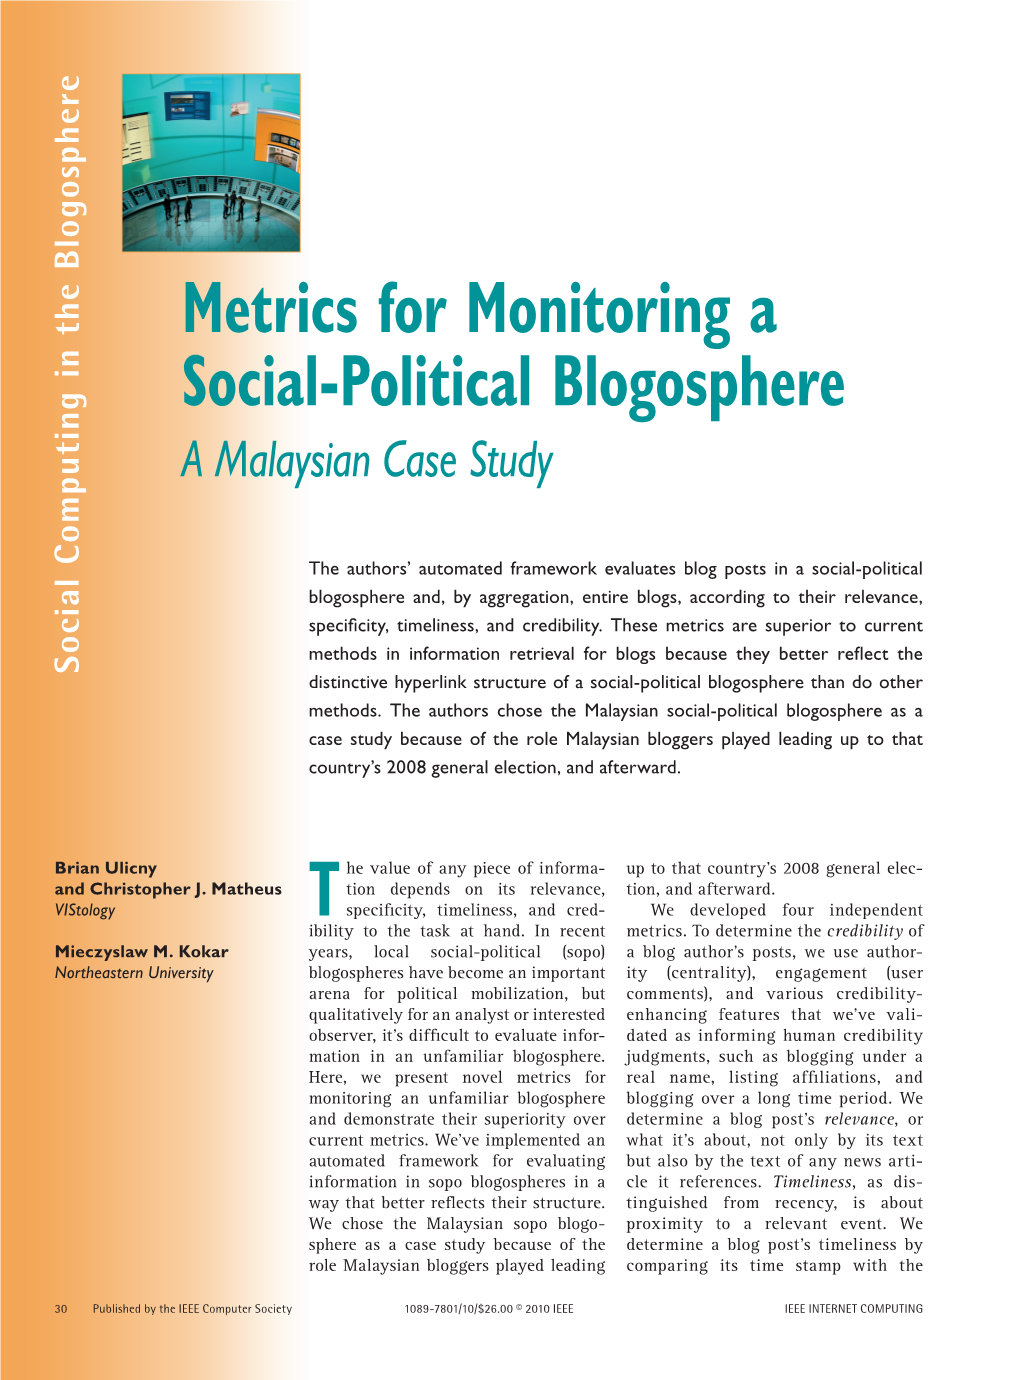 Metrics for Monitoring a Social-Political Blogosphere